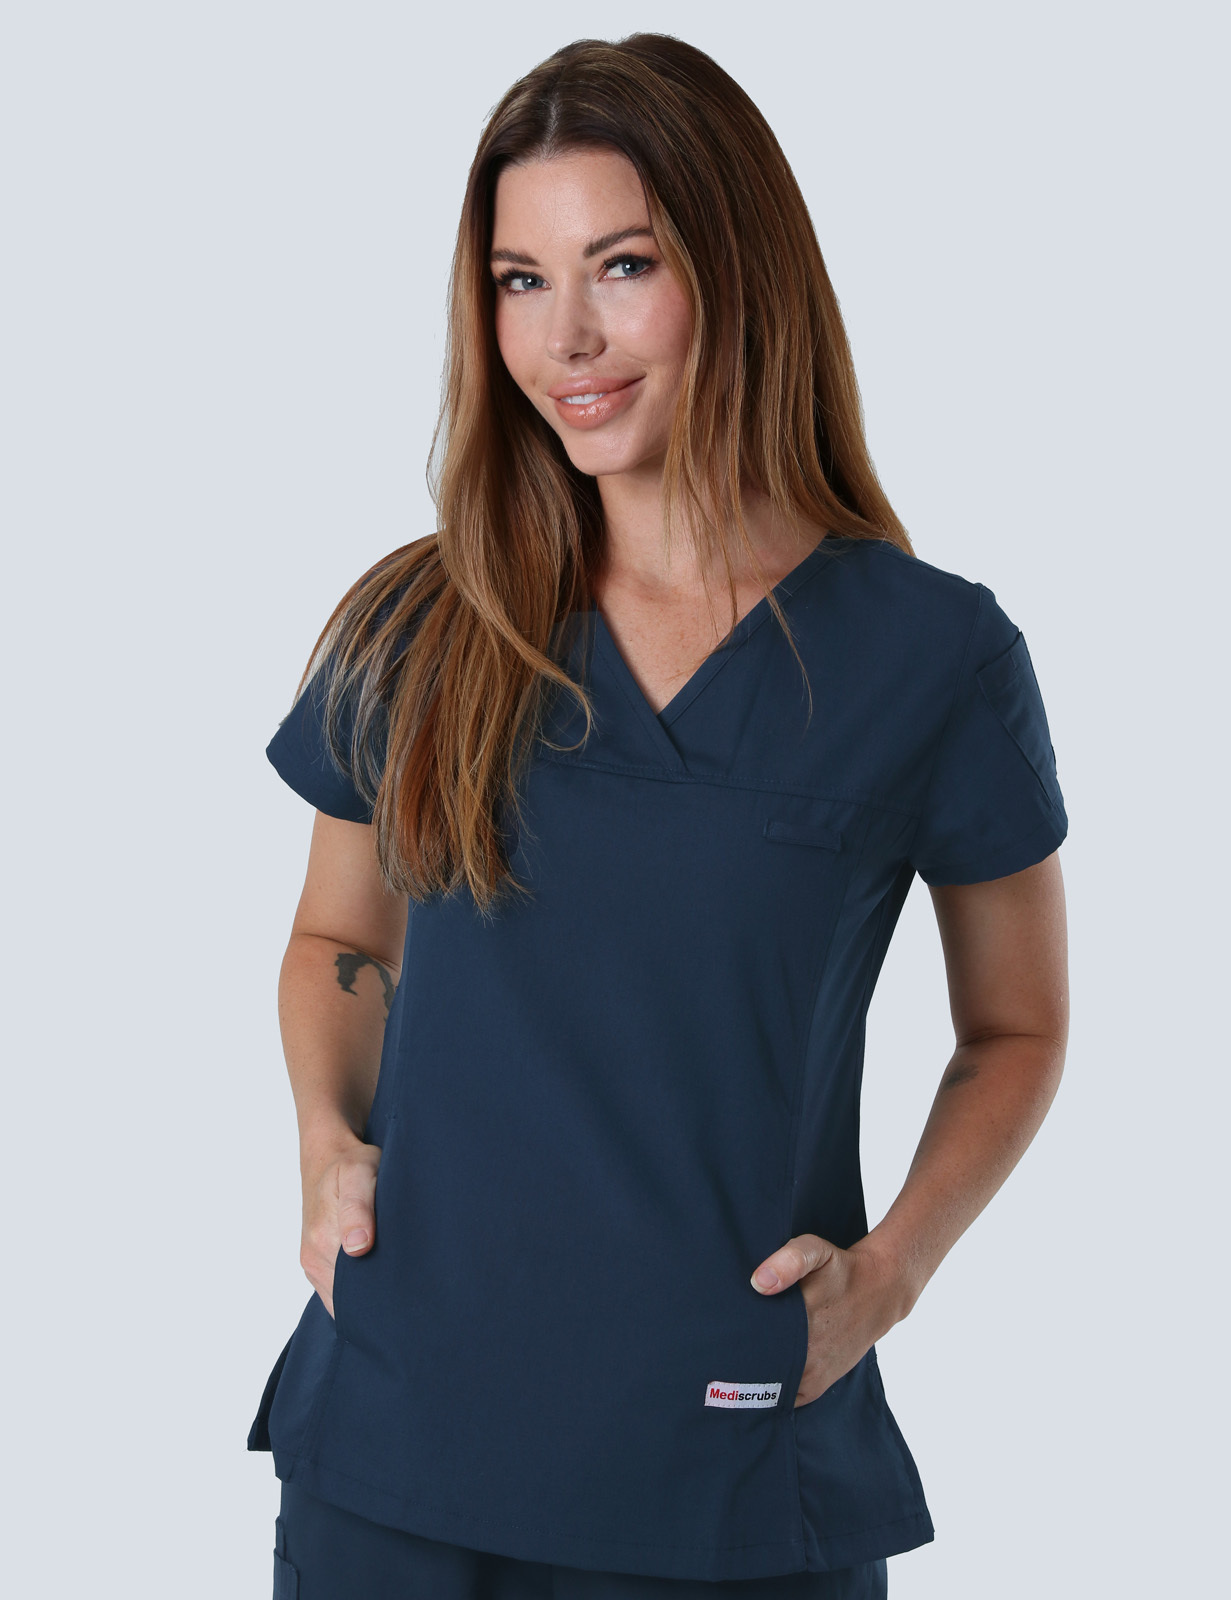 Redland Hospital - Medical Imaging (Women's Fit Solid in Navy incl Logos)